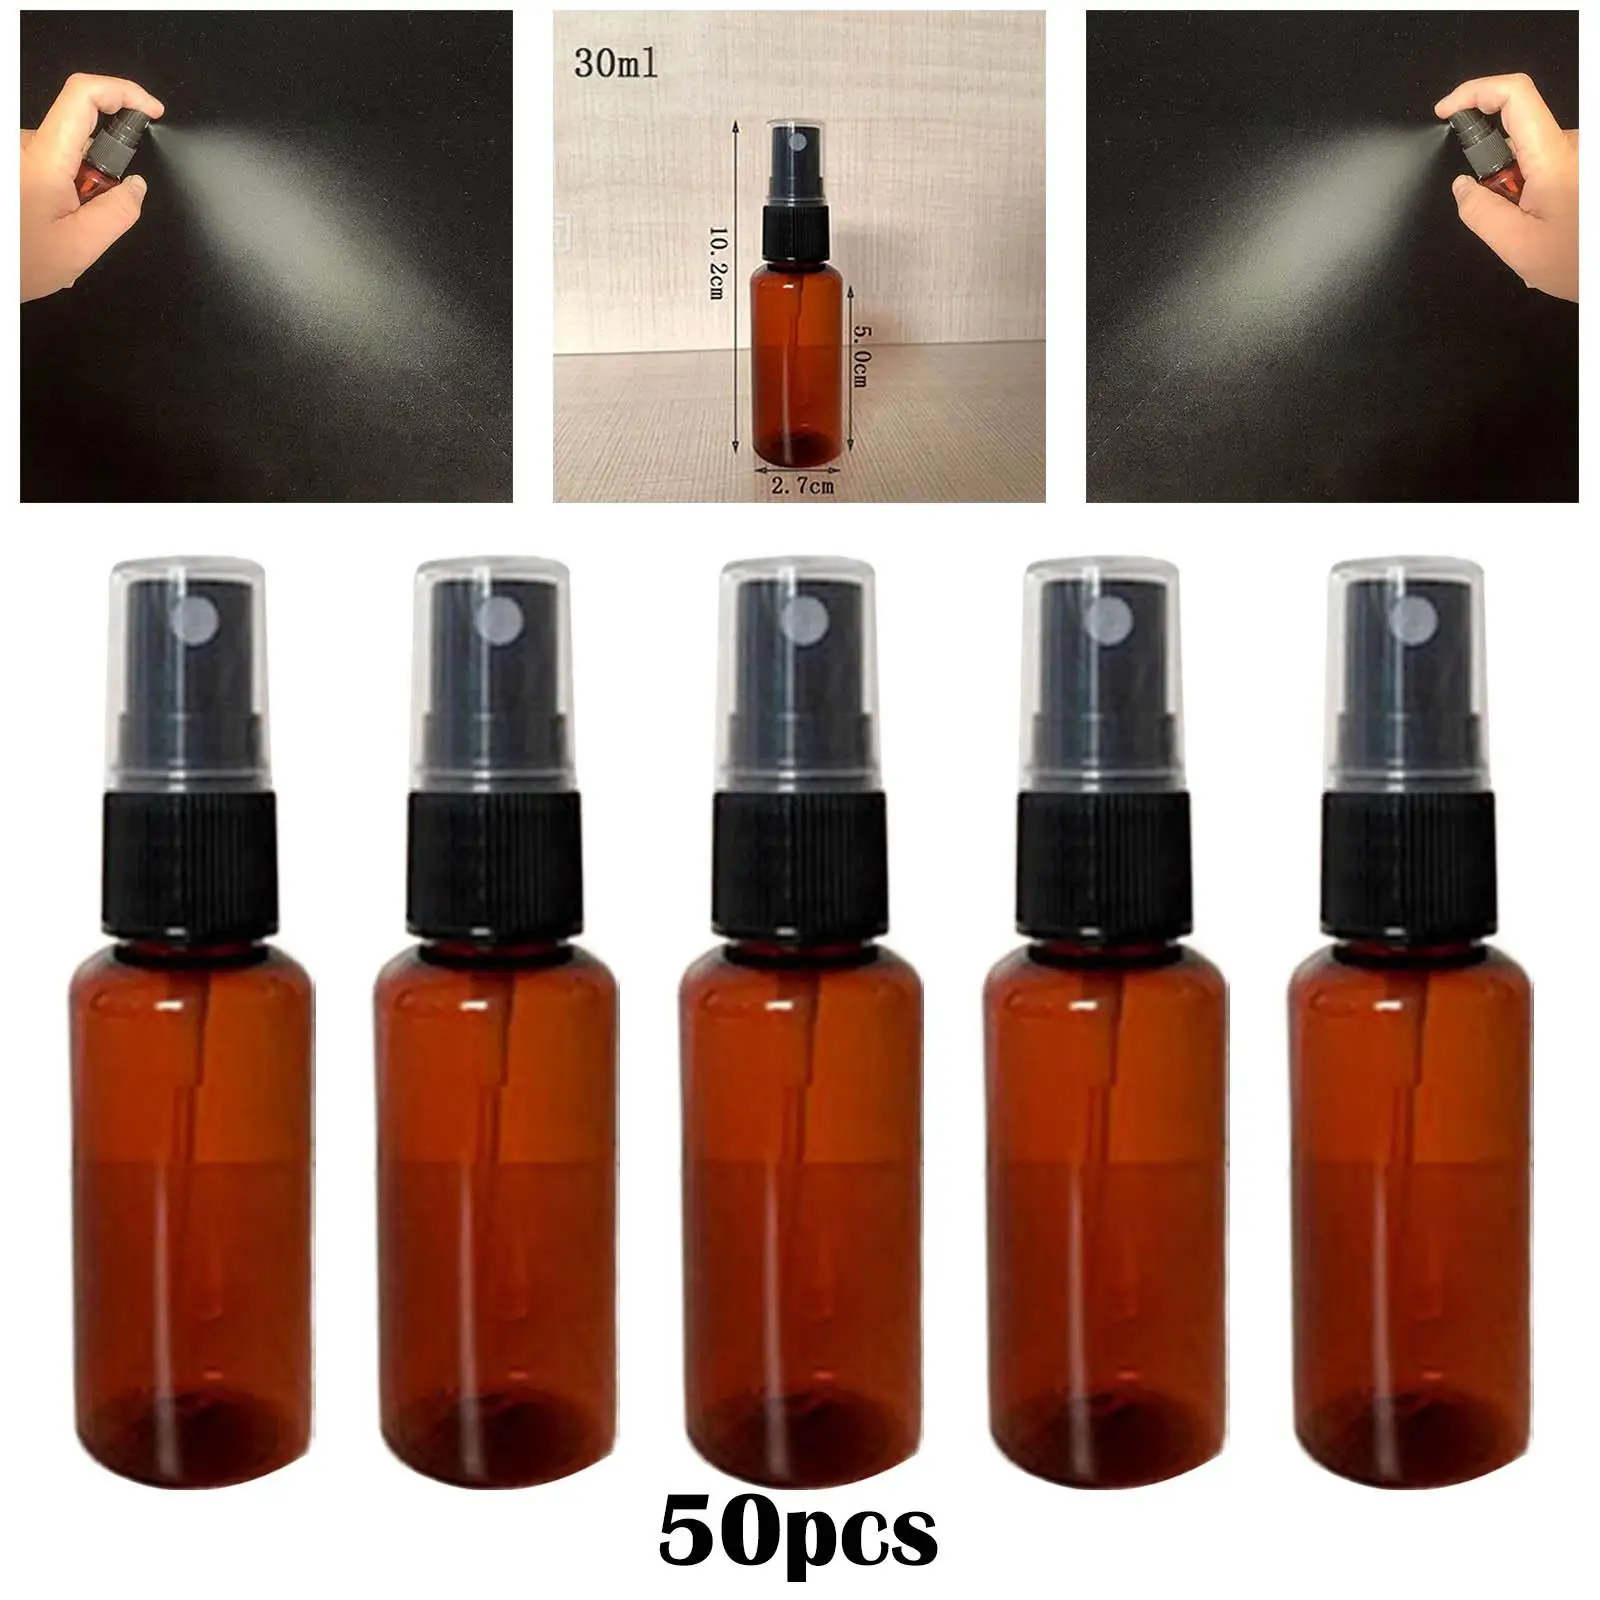 50Pcs Spray Bottle Refillable Travel Bottle Set Makeup Sprayer Liquid Container Plastic with Cover Empty Lightweight Mini 30ml